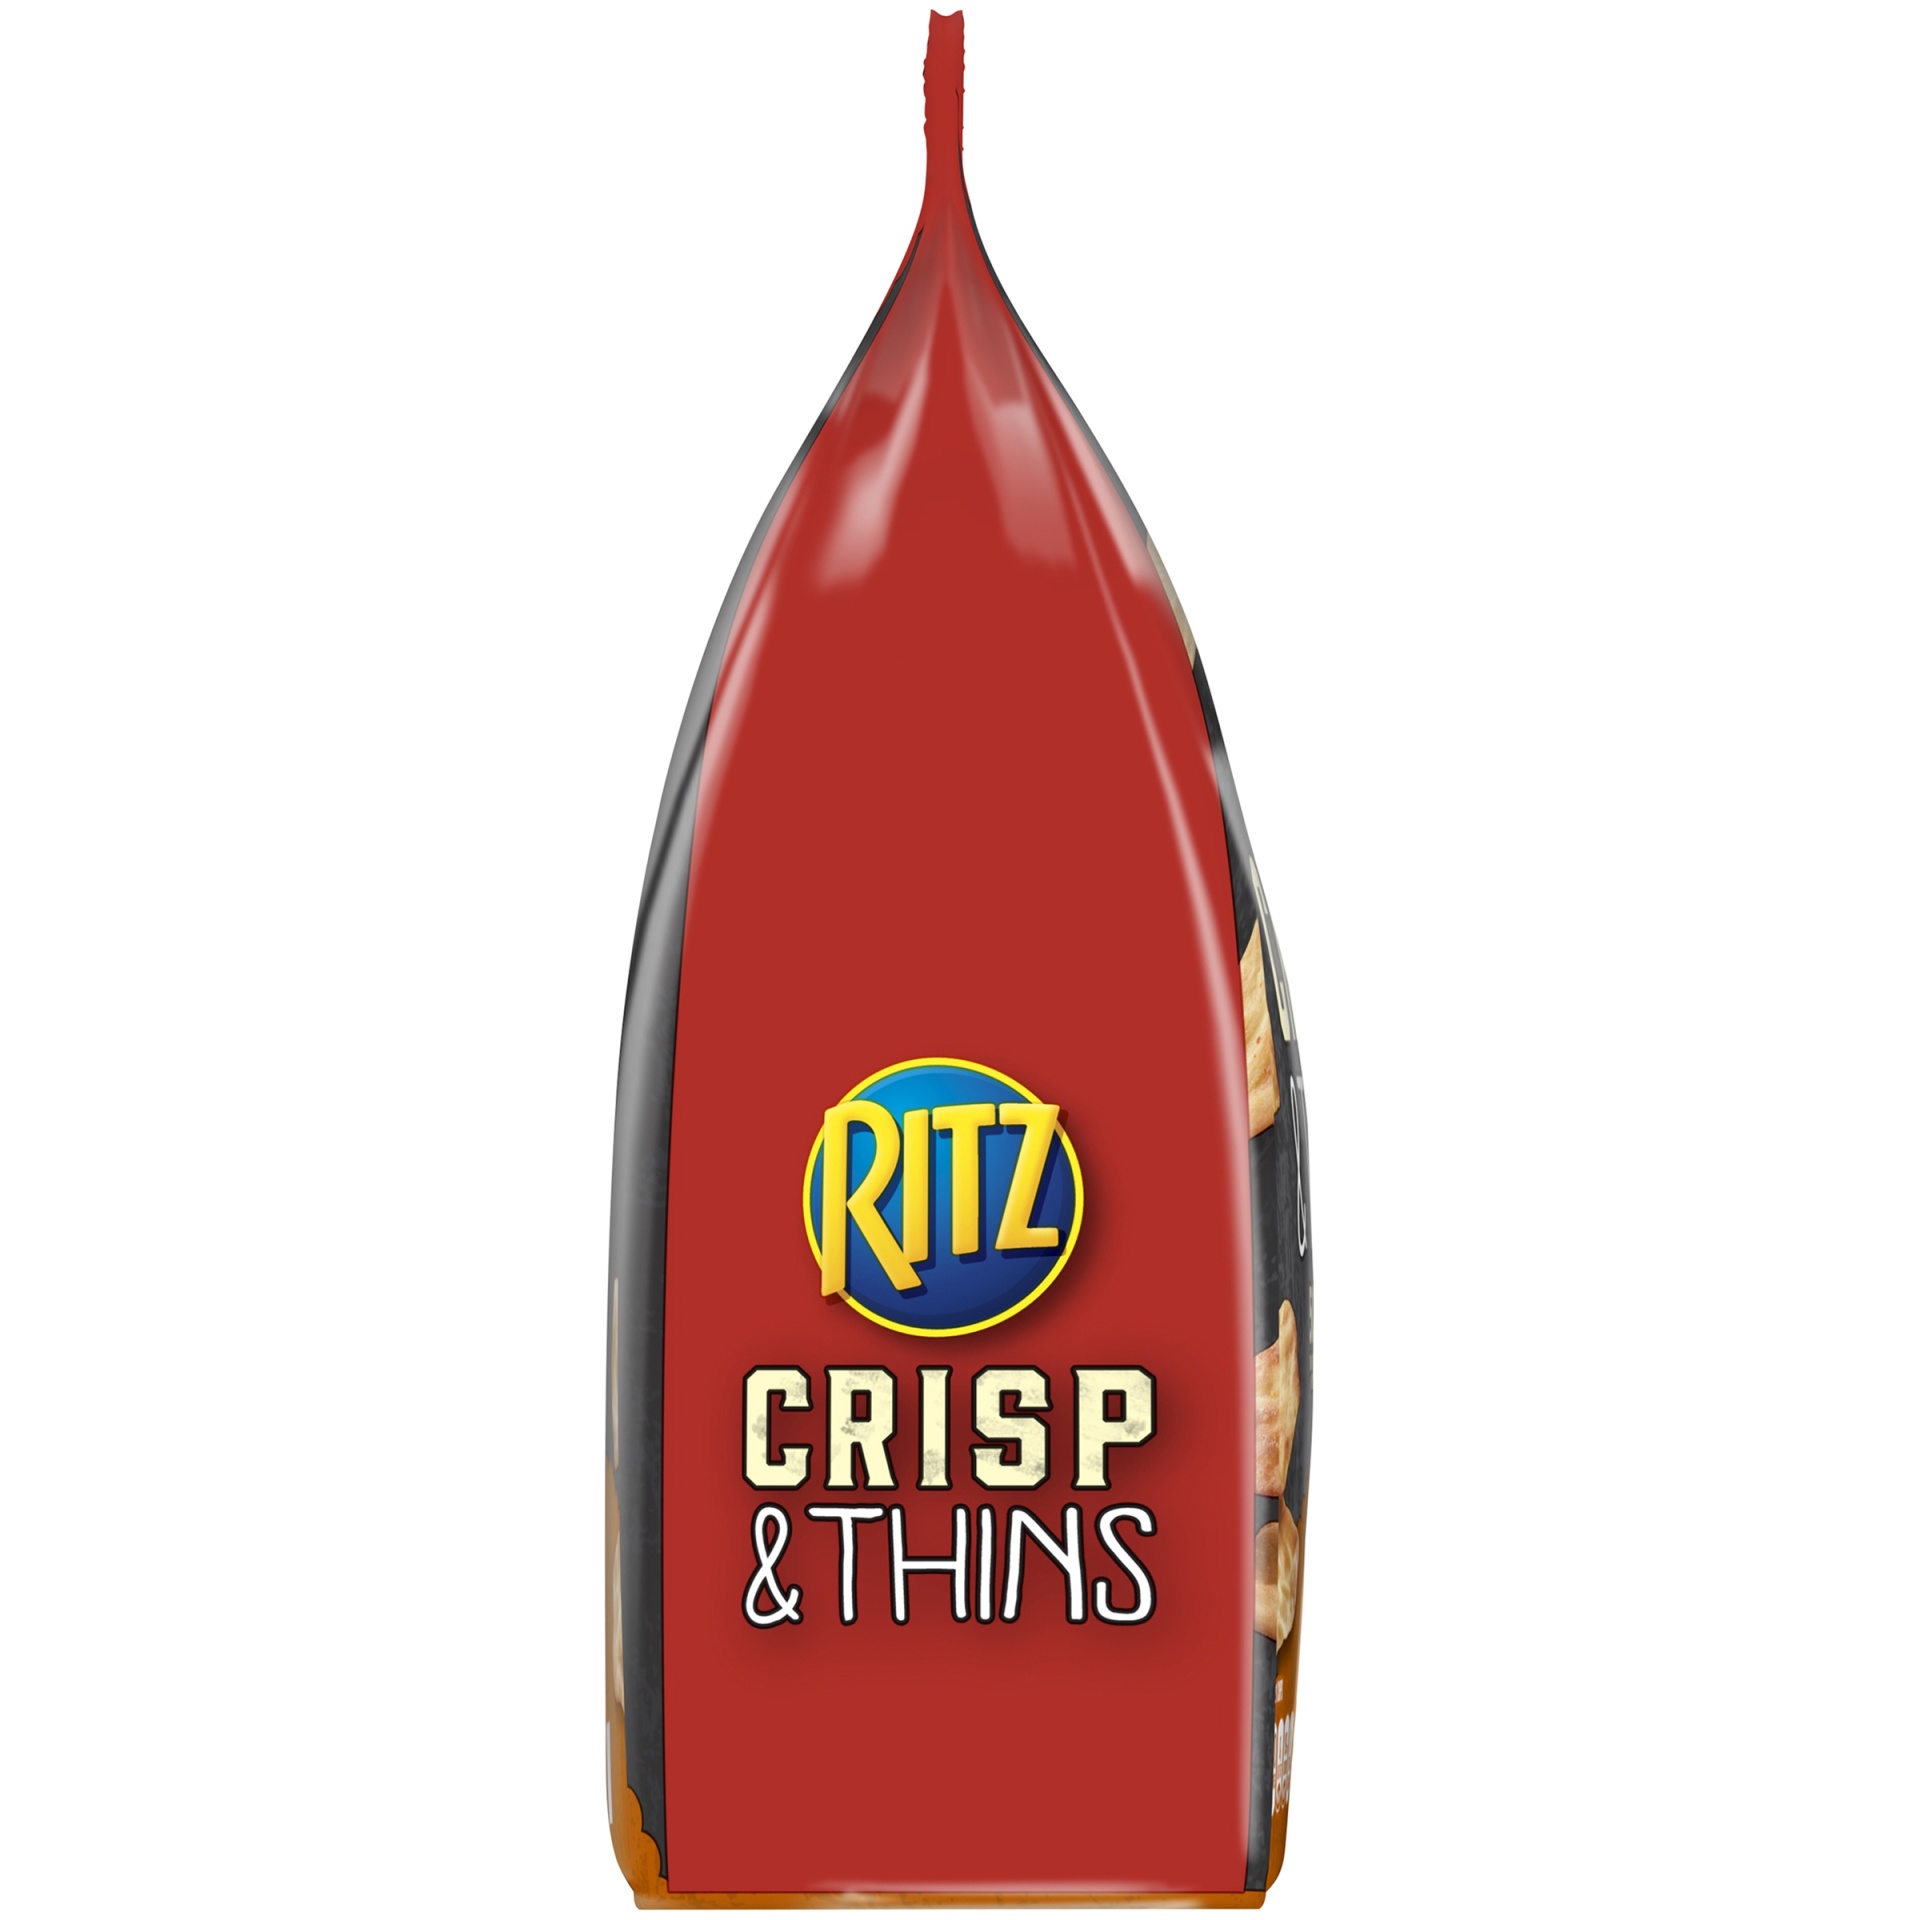 slide 3 of 9, Ritz Crisp & Thins Bacon Potato and Wheat Chips, 7.1 oz